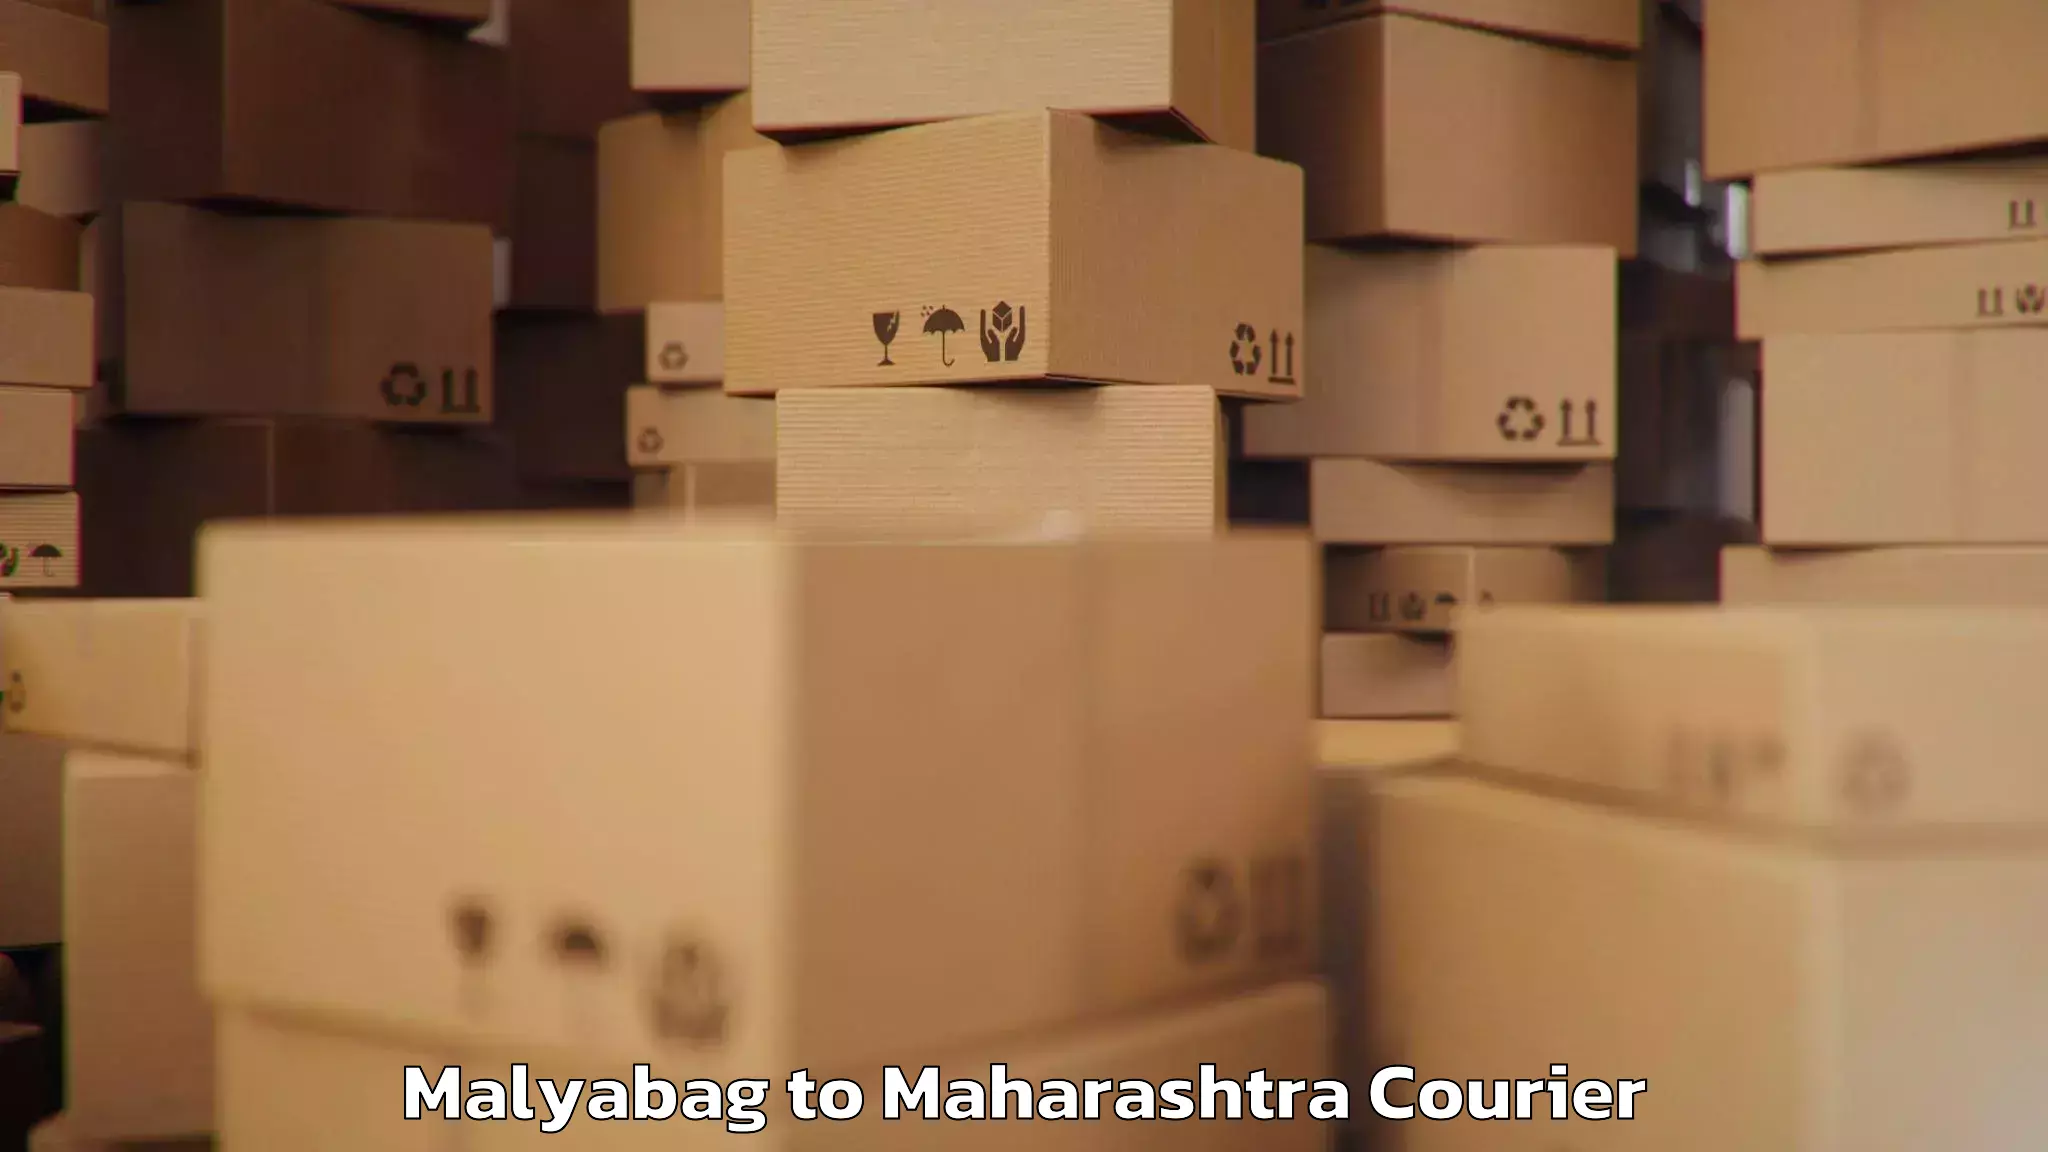 Baggage transport network Malyabag to Maharashtra